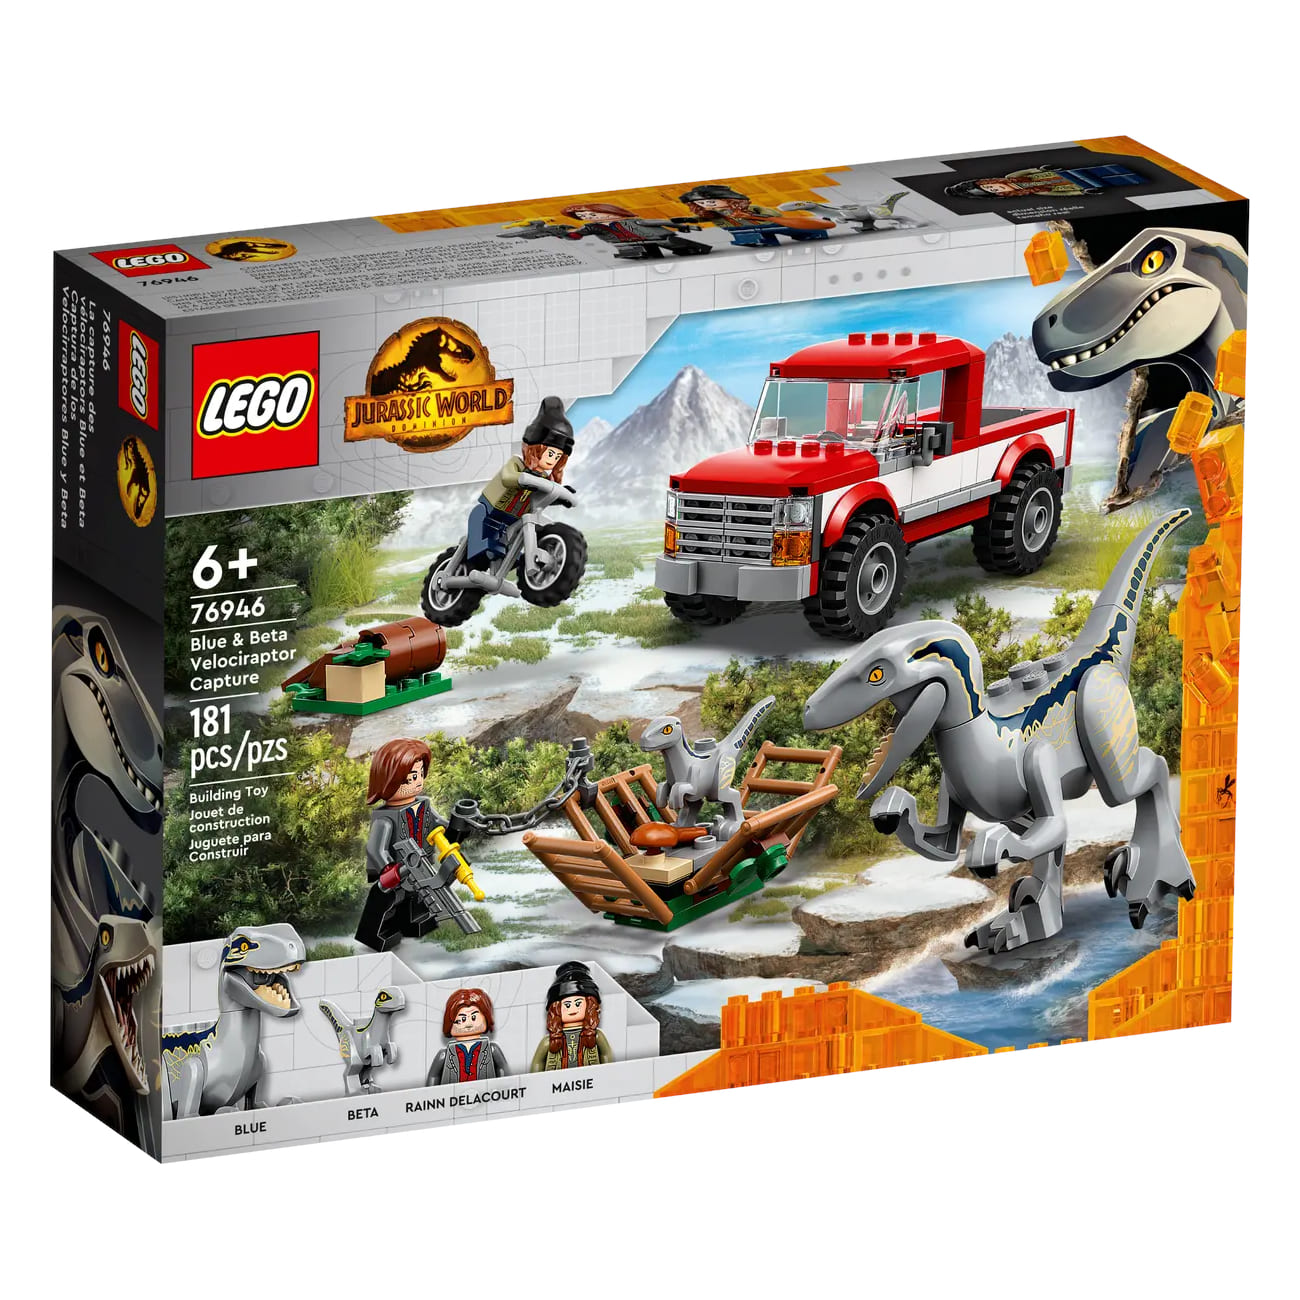 Конструктор LEGO Jurassic World Blue & Beta Velociraptor Capture 76946, 181 деталь